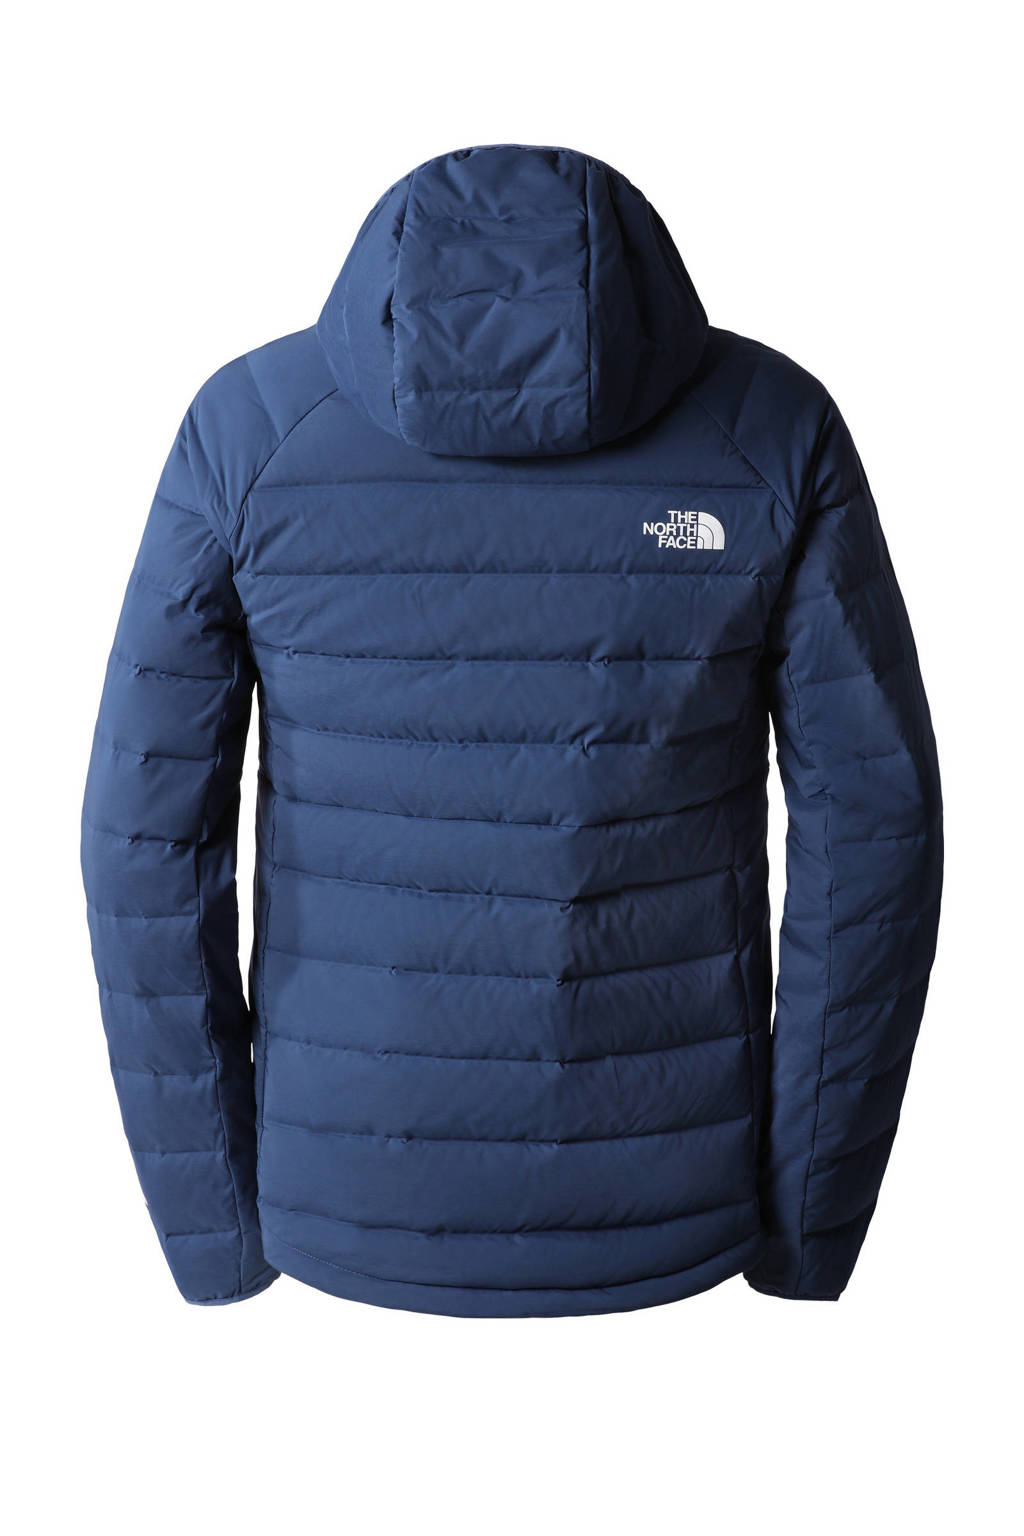 is er Veeg koud The North Face outdoor jas donkerblauw | wehkamp